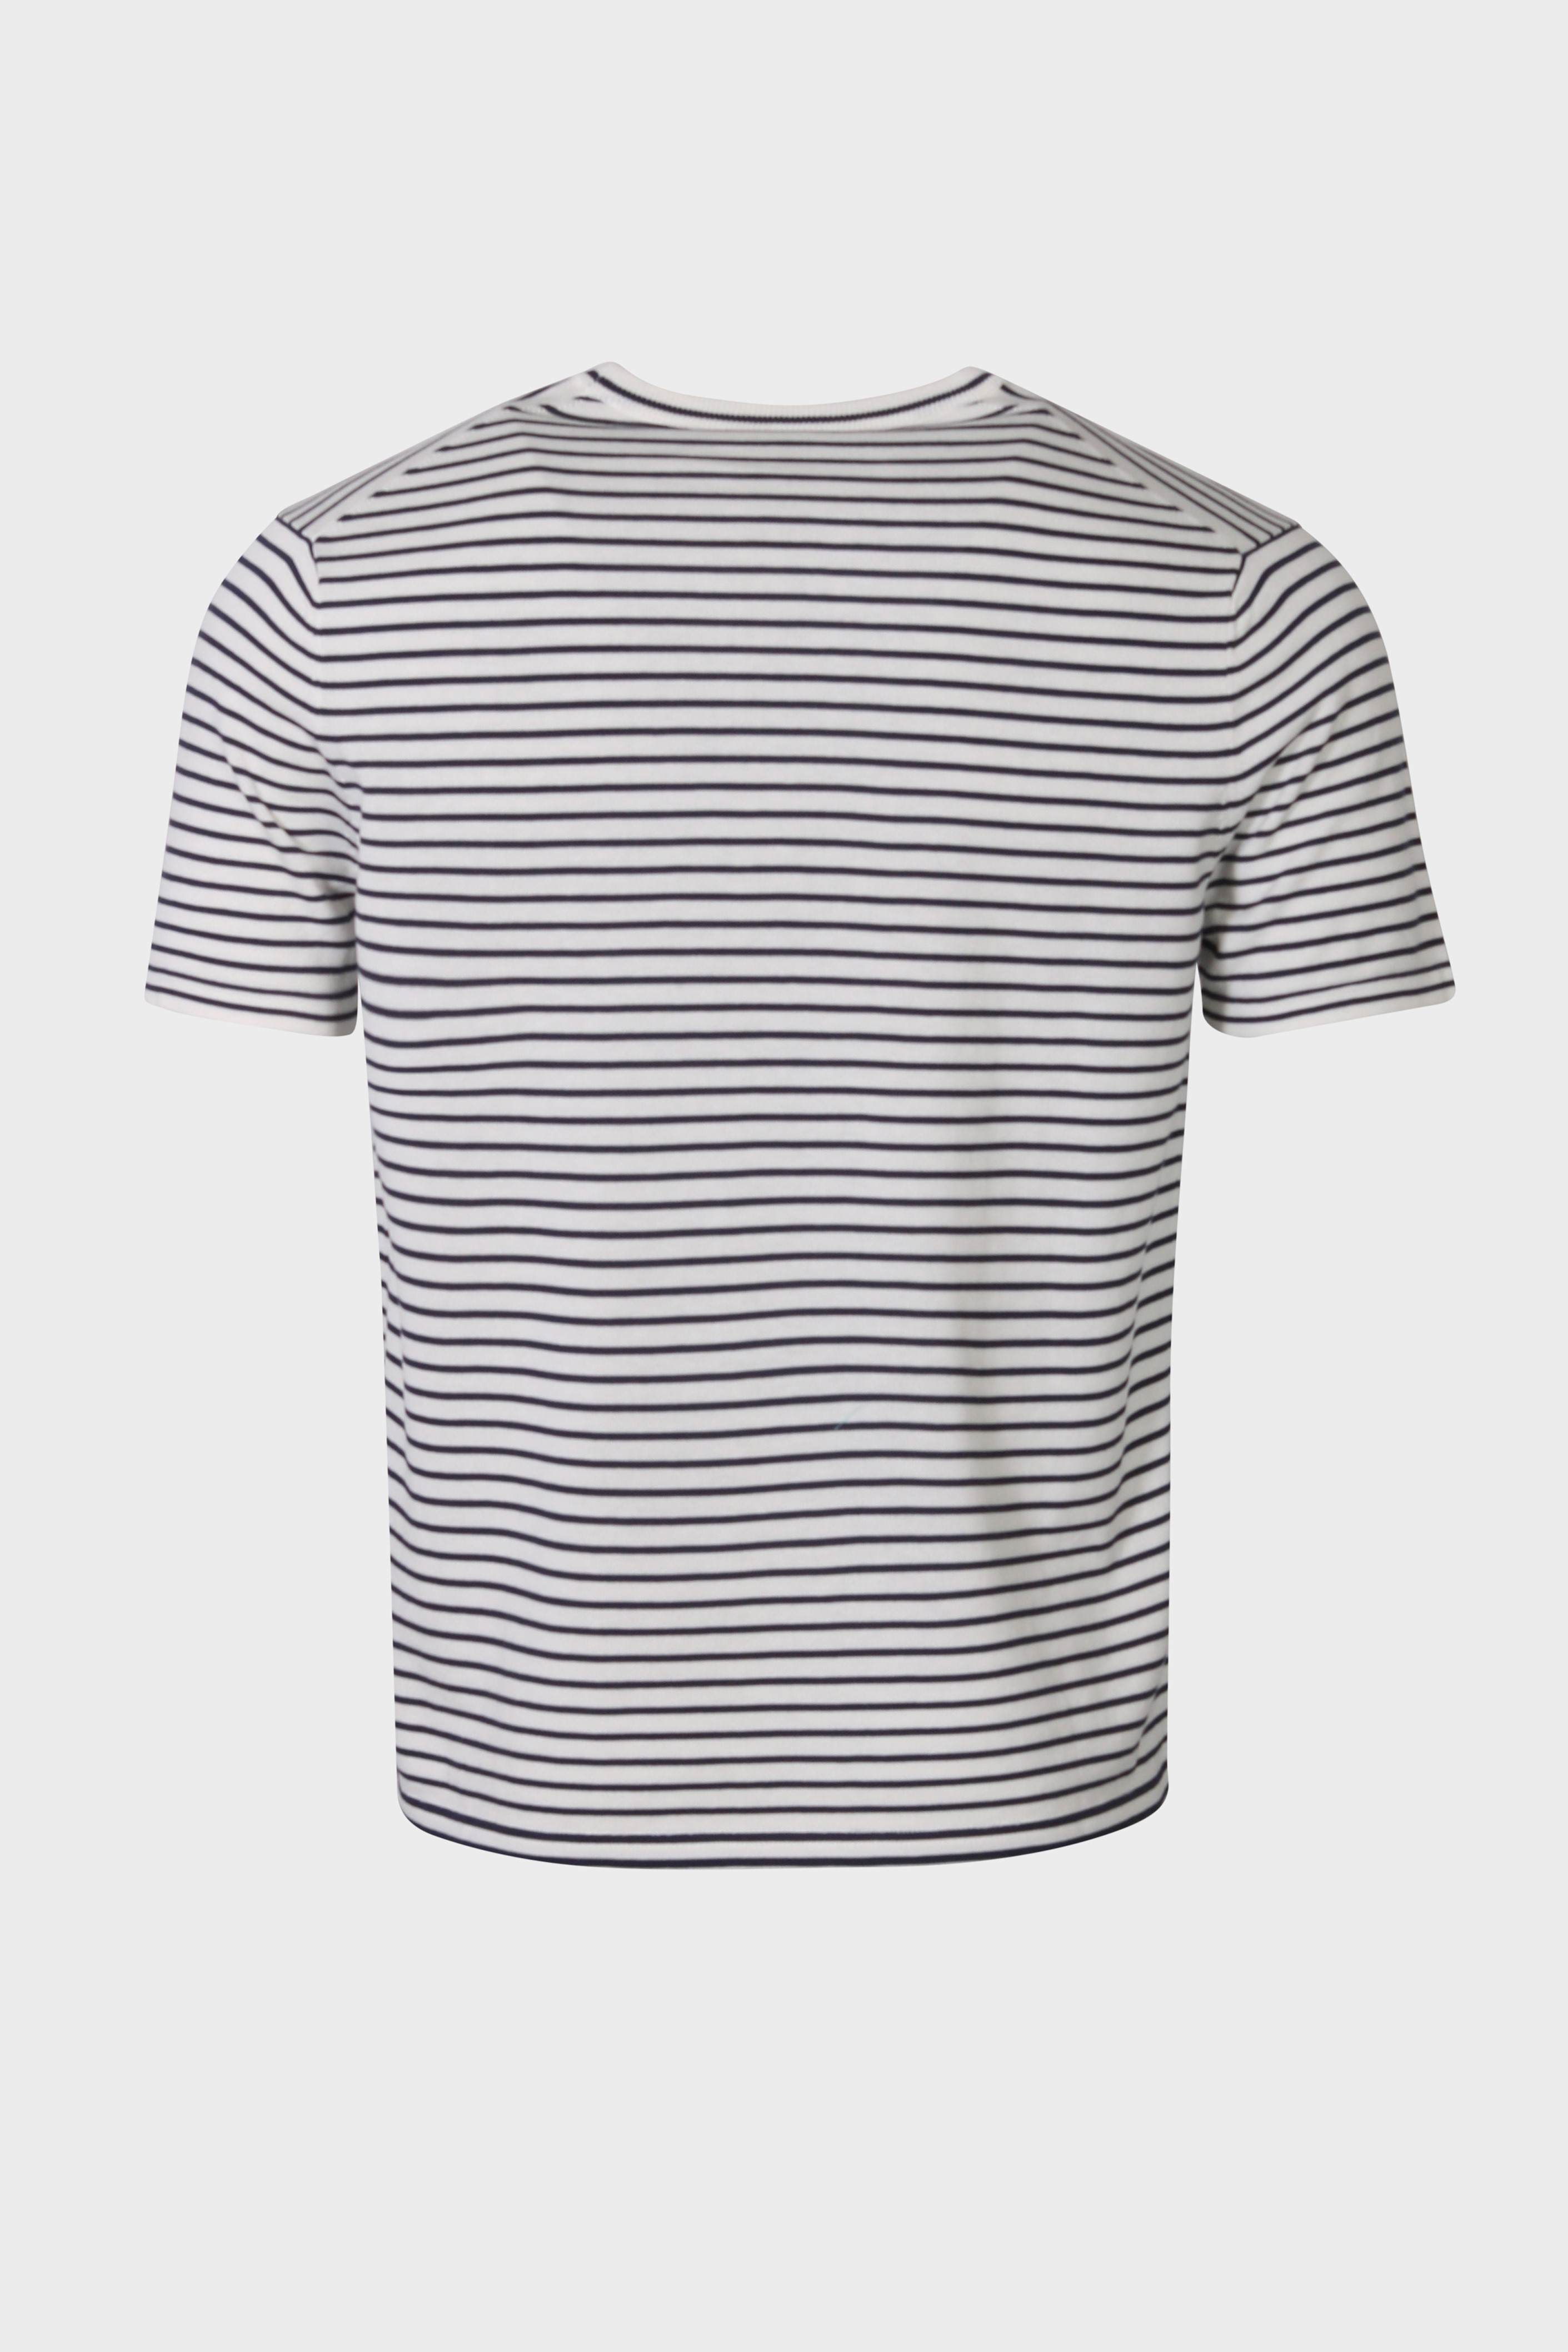 ASPESI Striped Knit T-Shirt in Navy/White 52